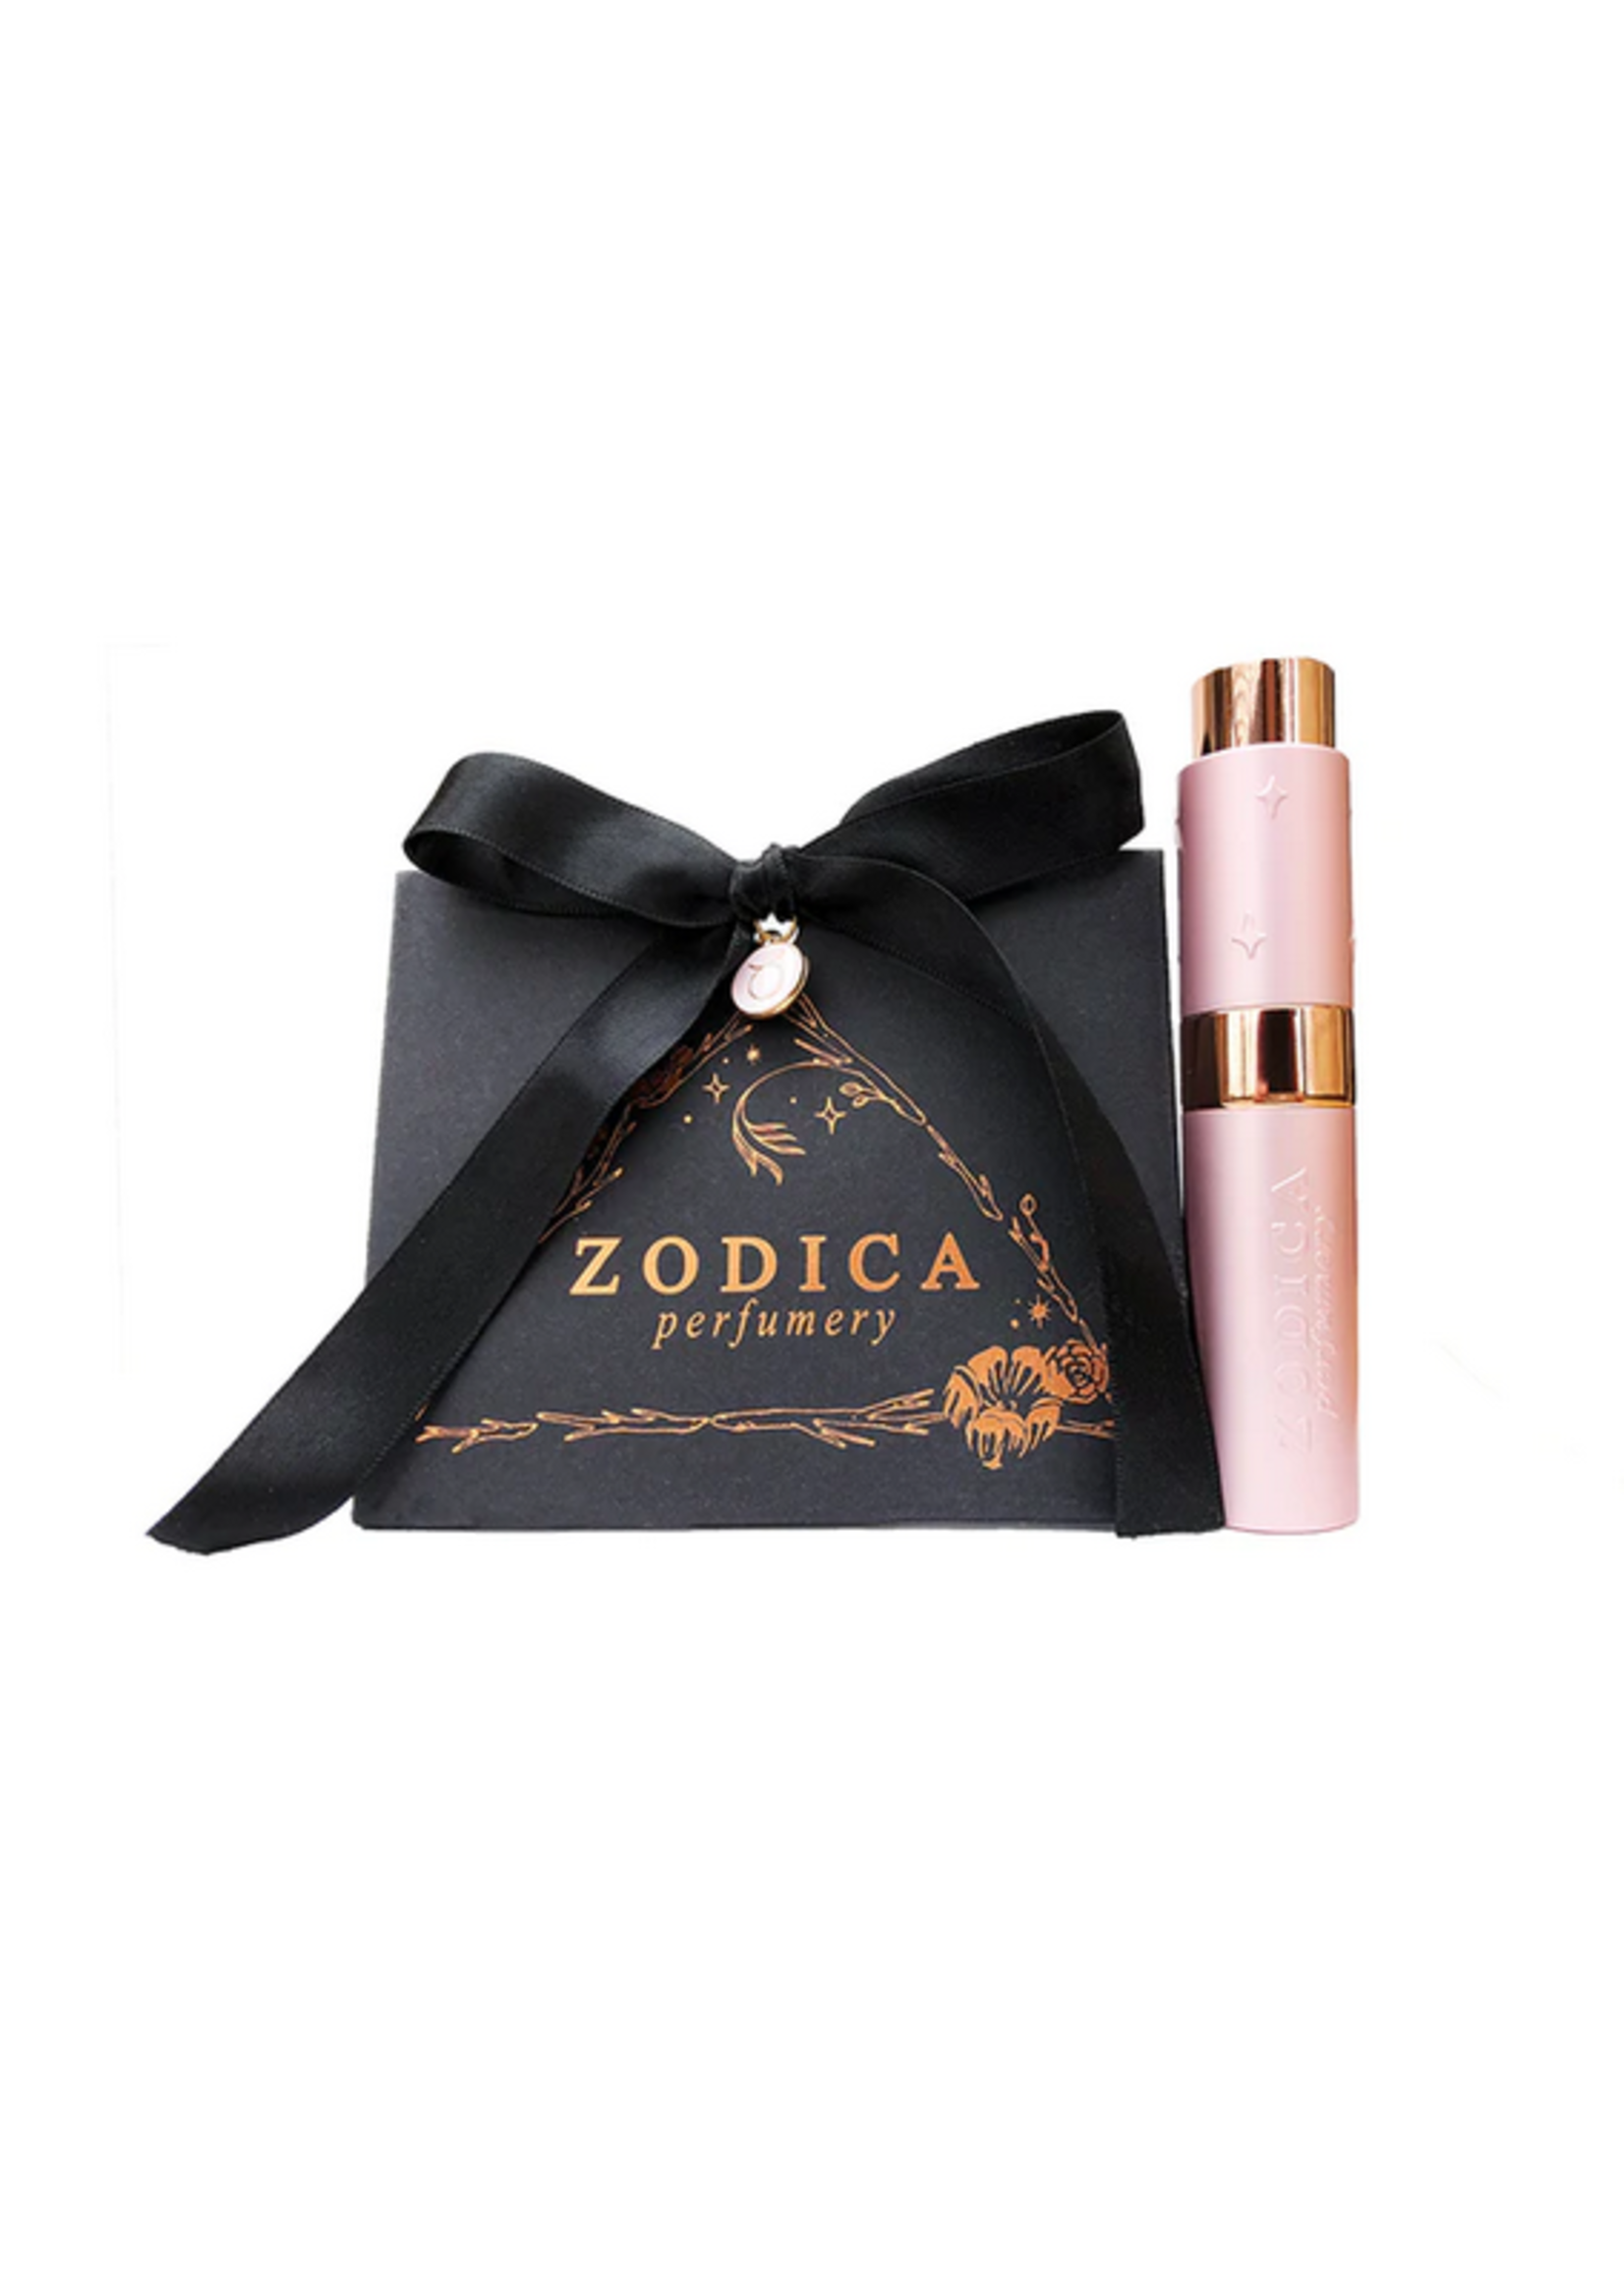 Zodica Perfume Twist & Spritz Travel Spray Gift Gemini